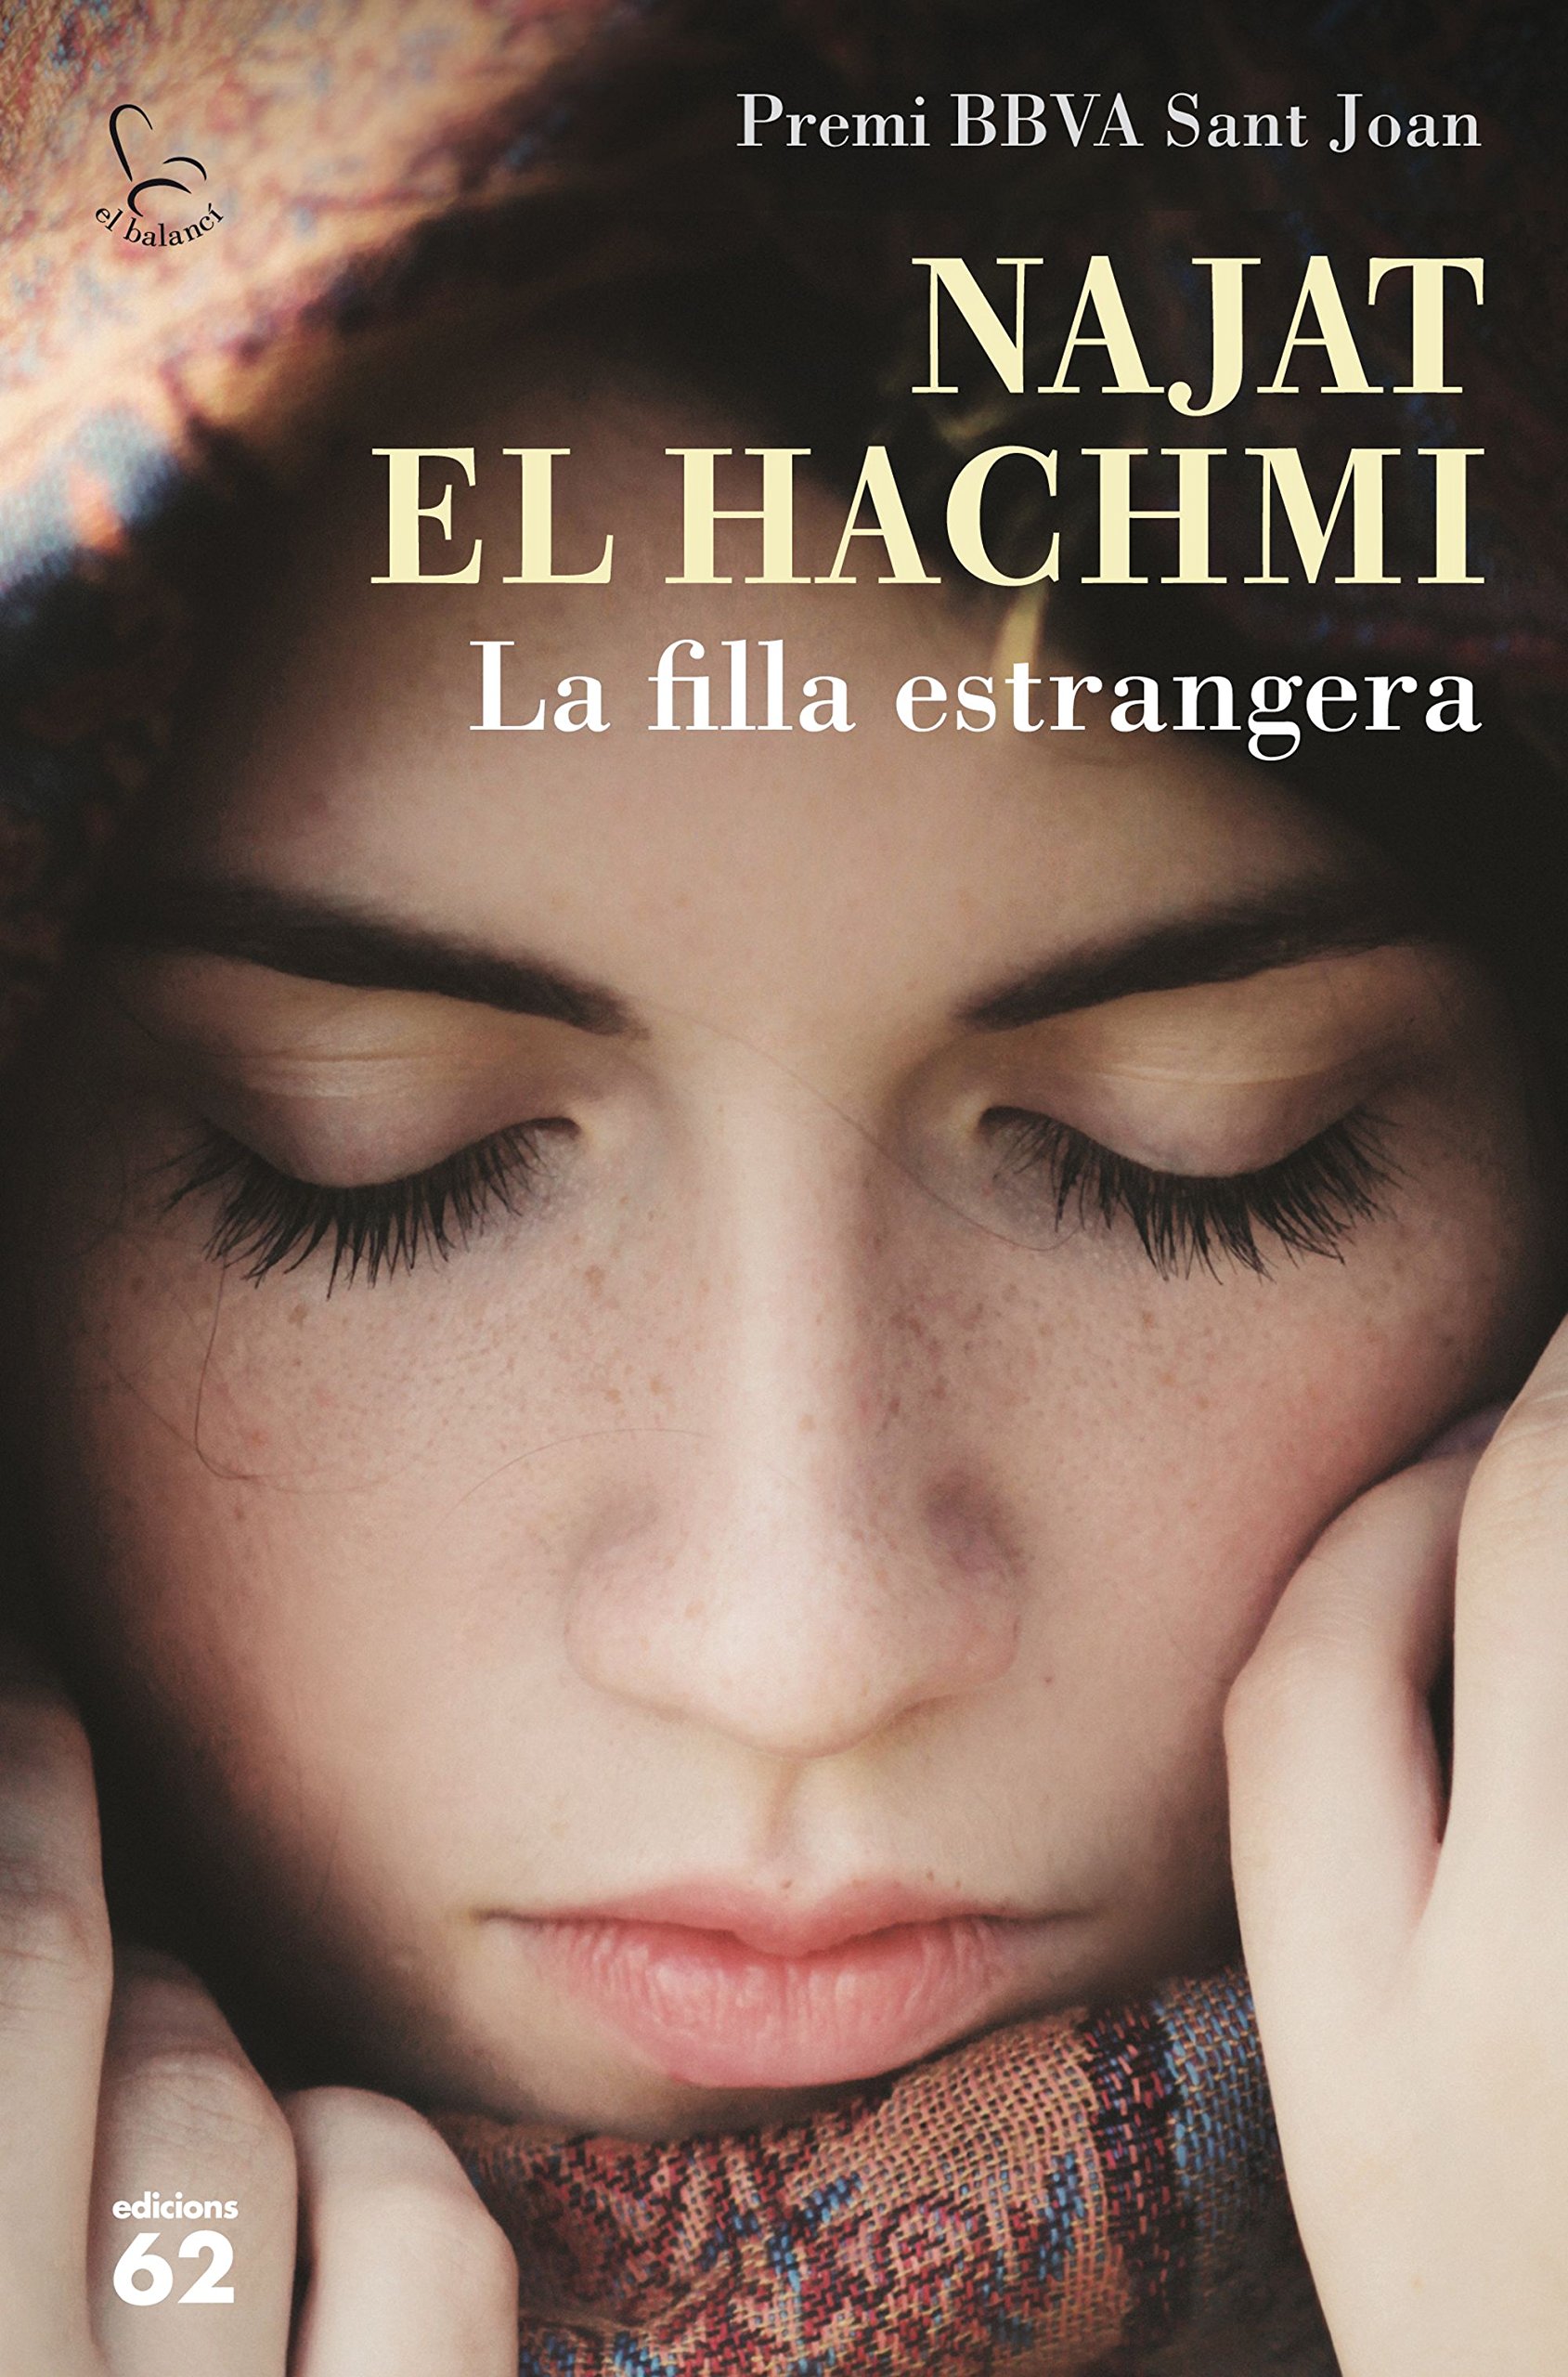 Cover of Najat El Hachmi's "La filla estrangera", literally 'the foreign daughter' (published in Catalan by Edicions 62)